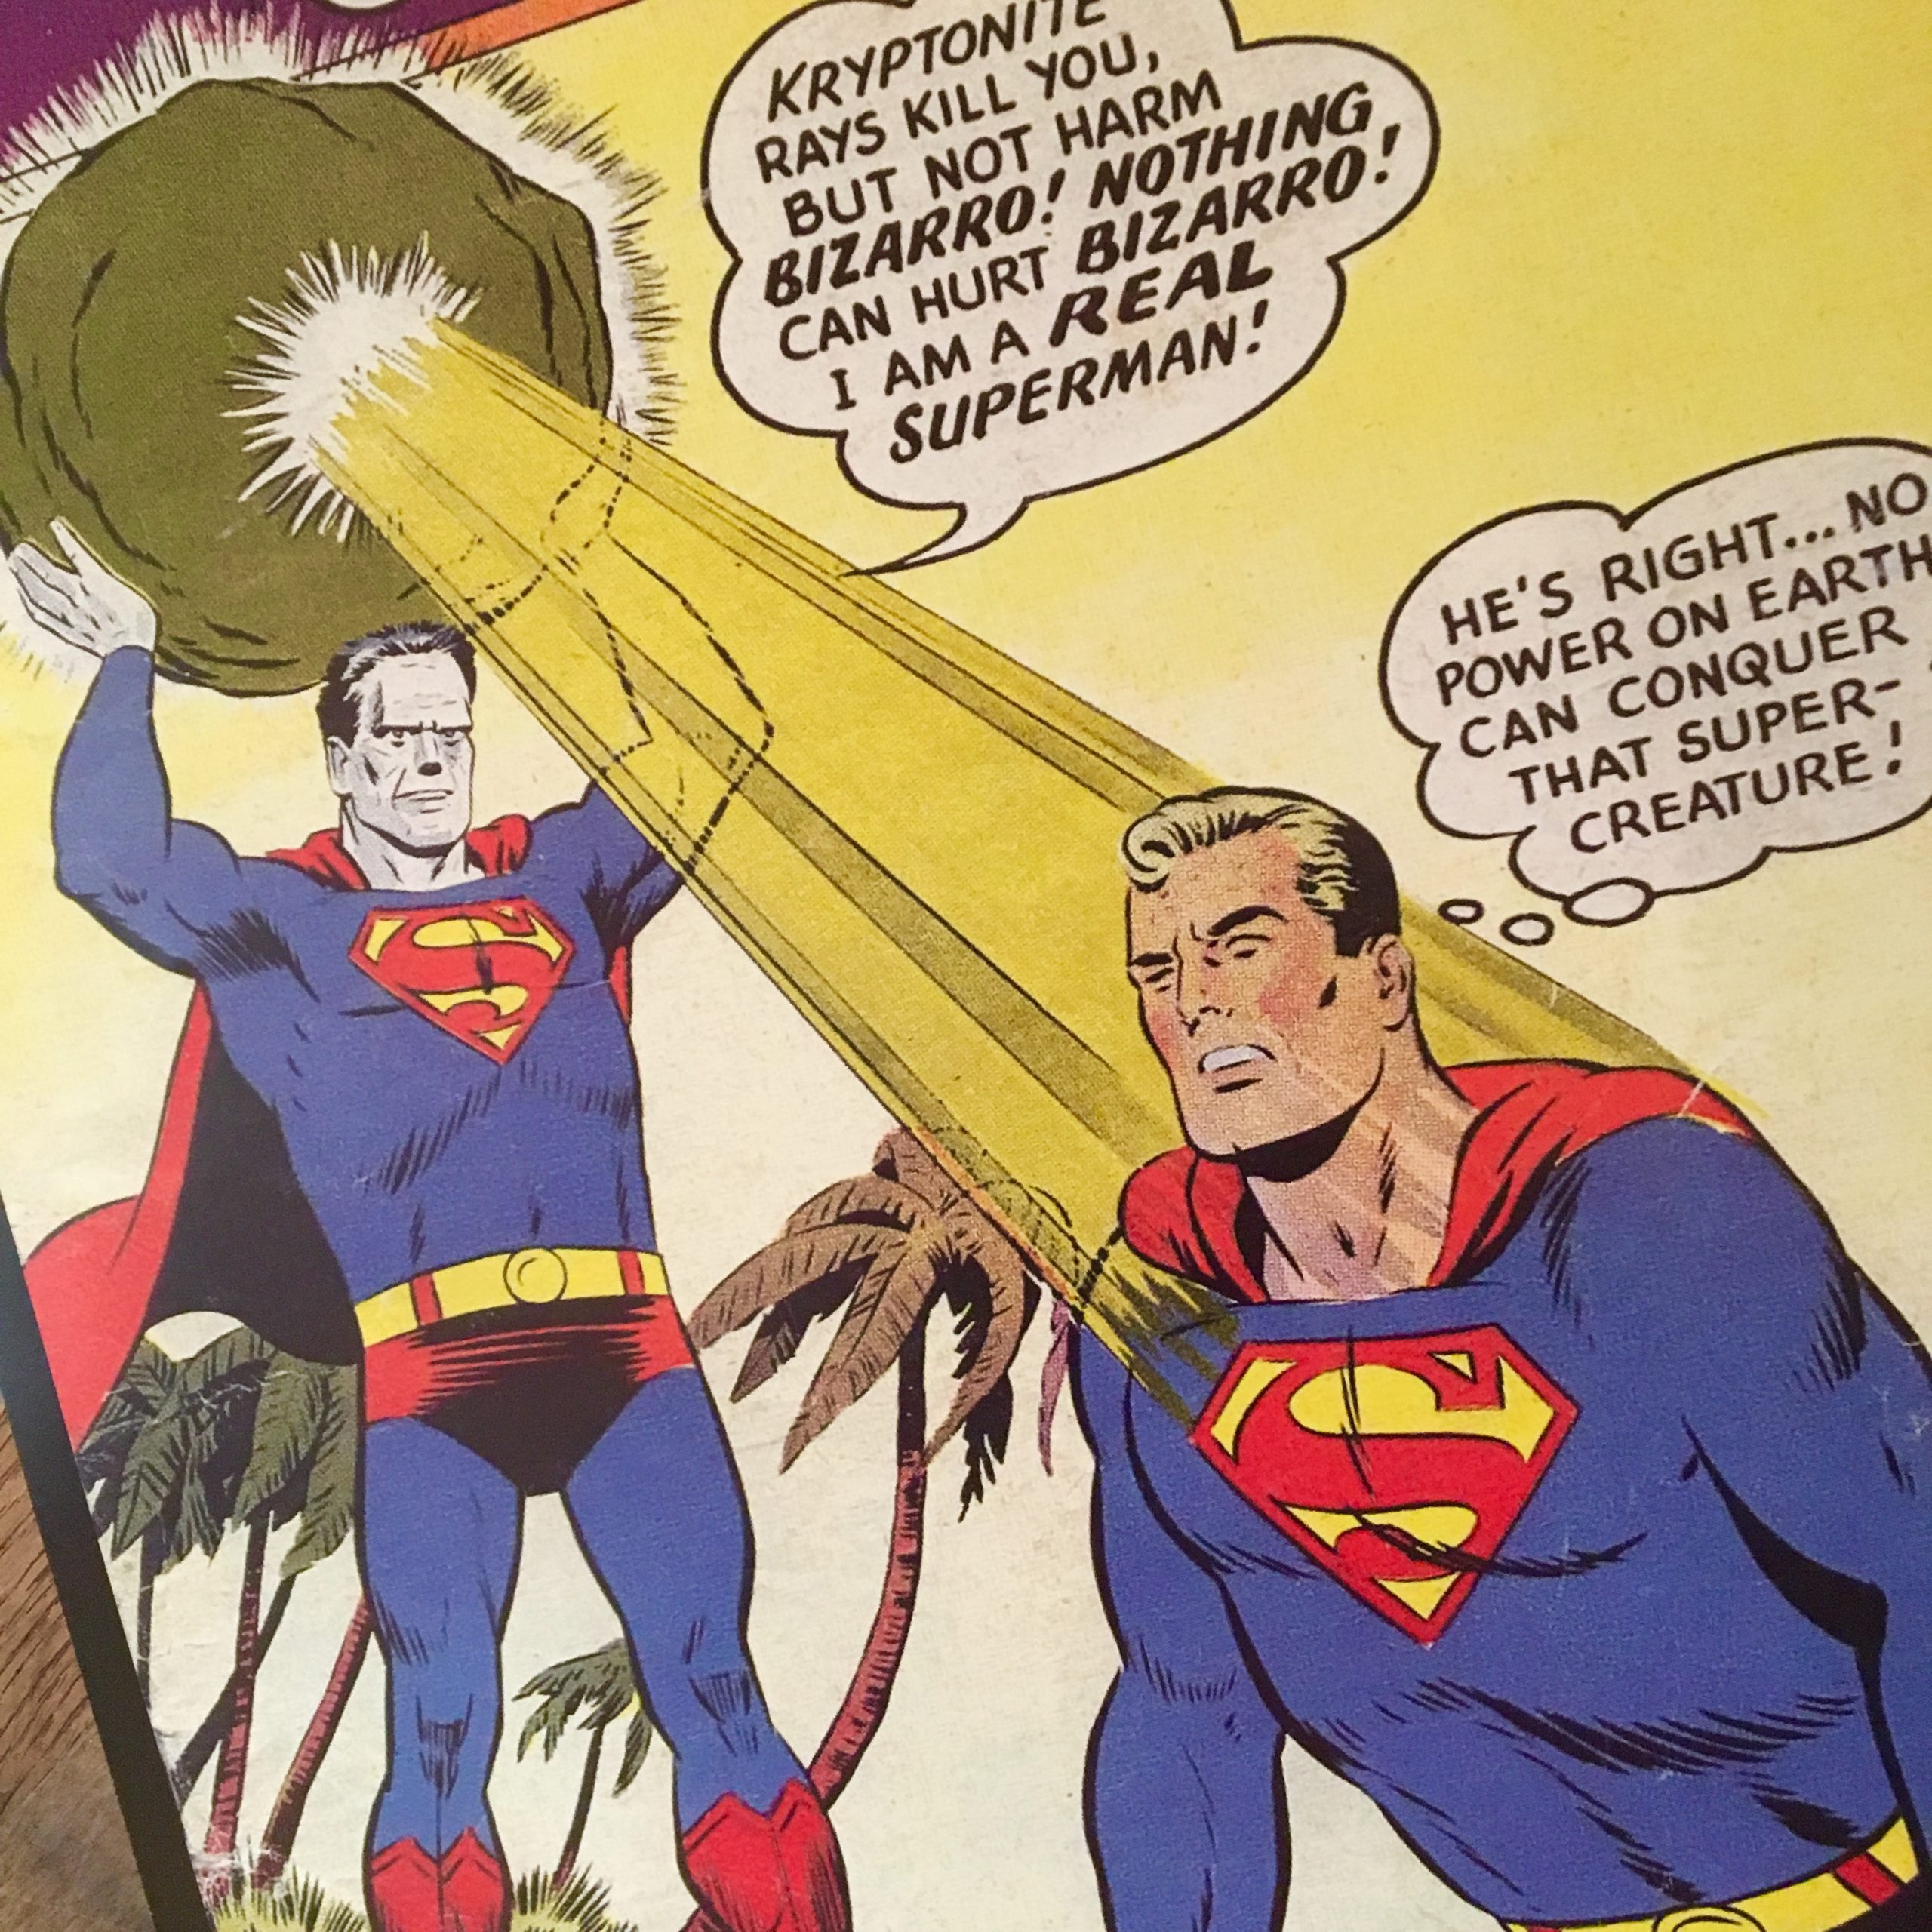 Kryptonite Rays Kill You, But Not Harm BIZARRO!!!